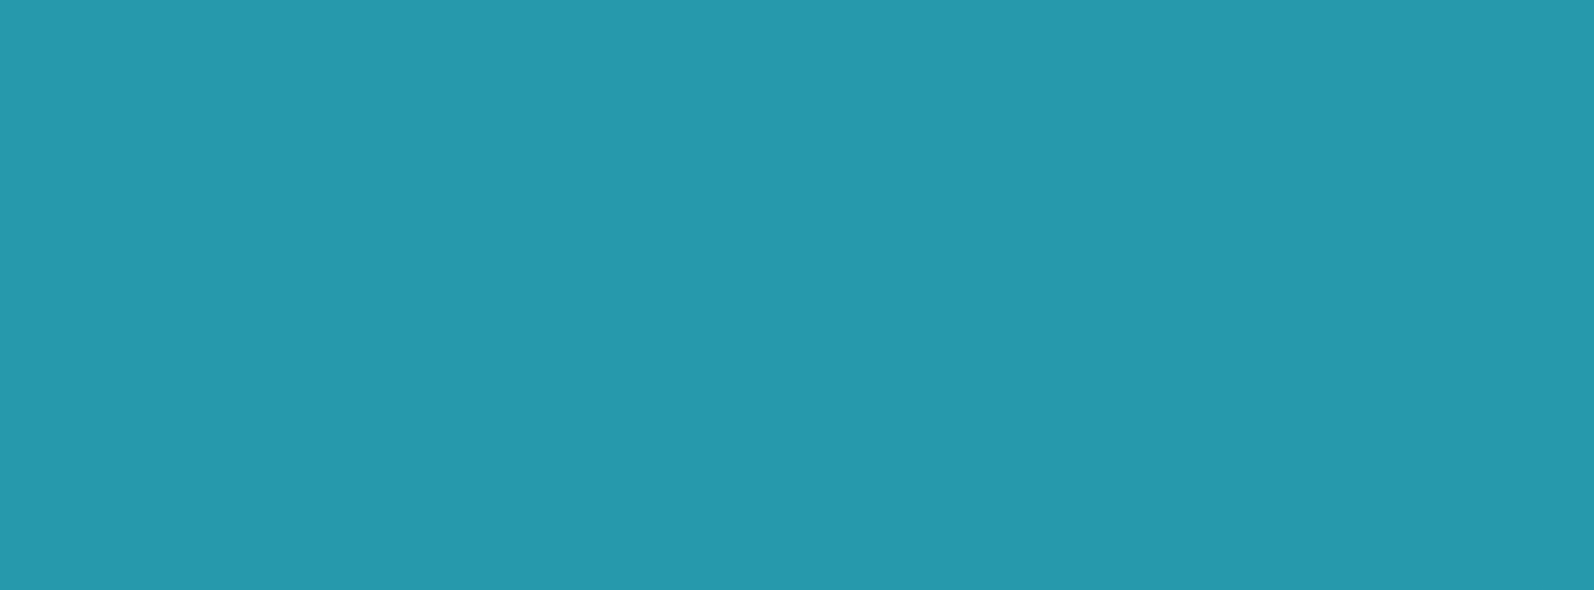 5190 - Mavi Mercan